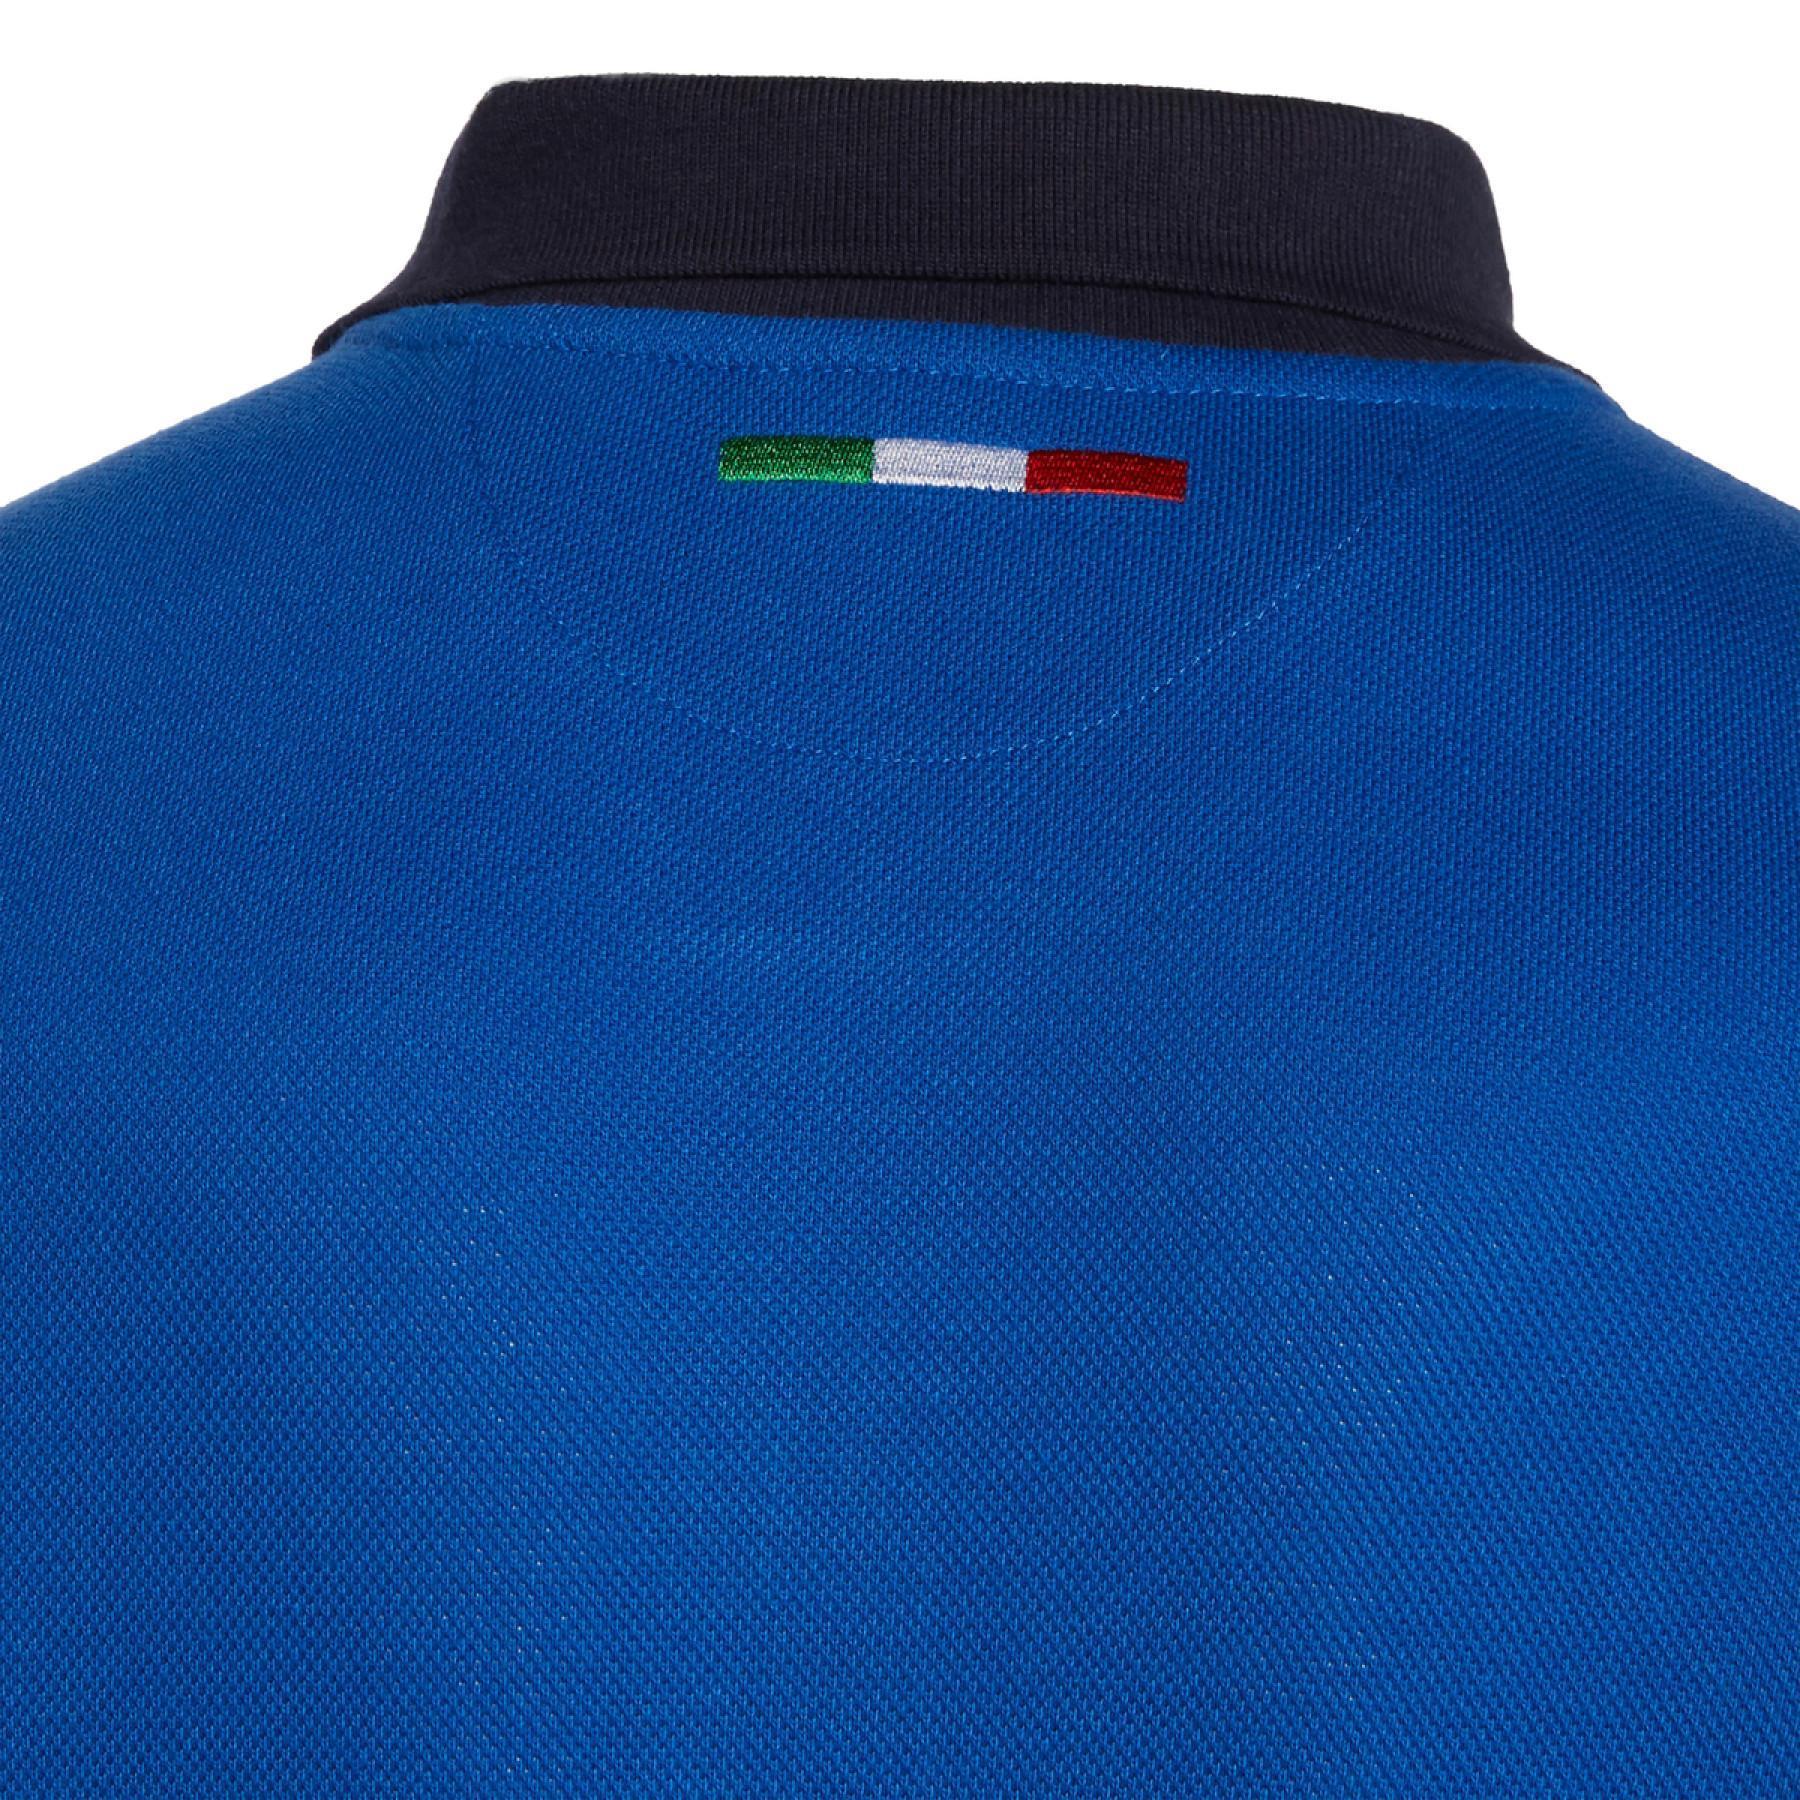 Cotton pique polo shirt Italie rugby 2019